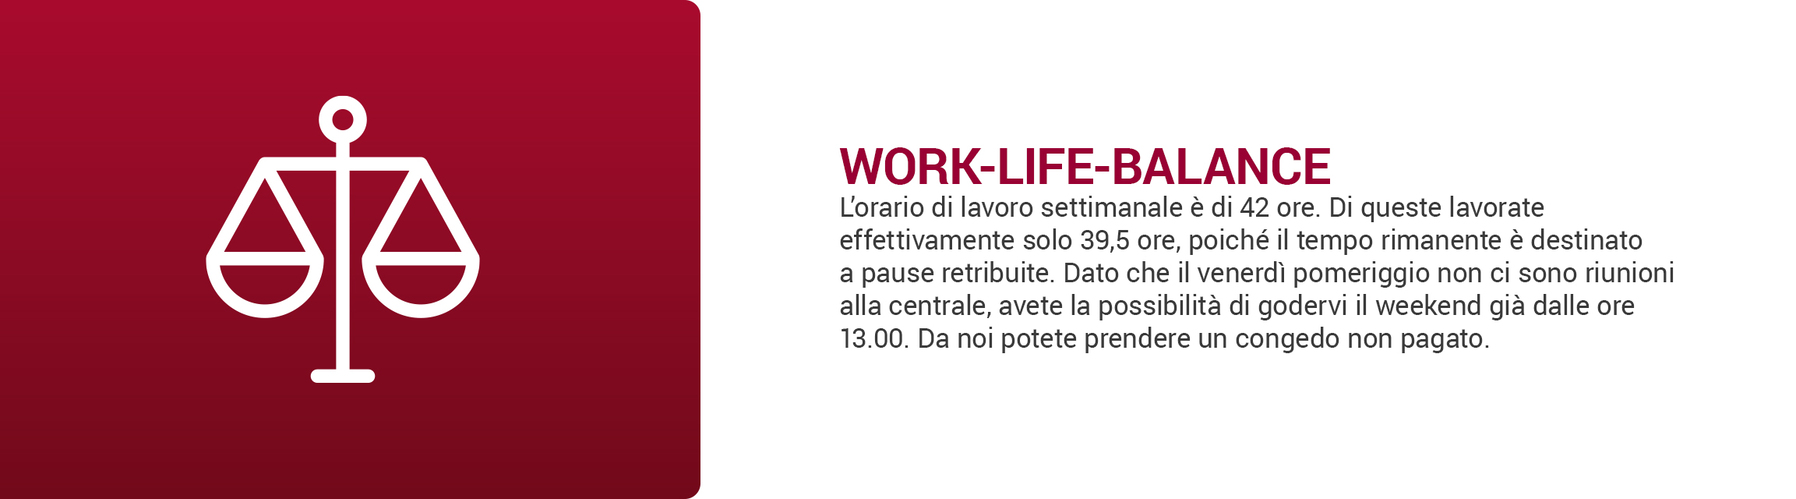 O_23-37_Jobs-worklife_nwide_it_02.jpg